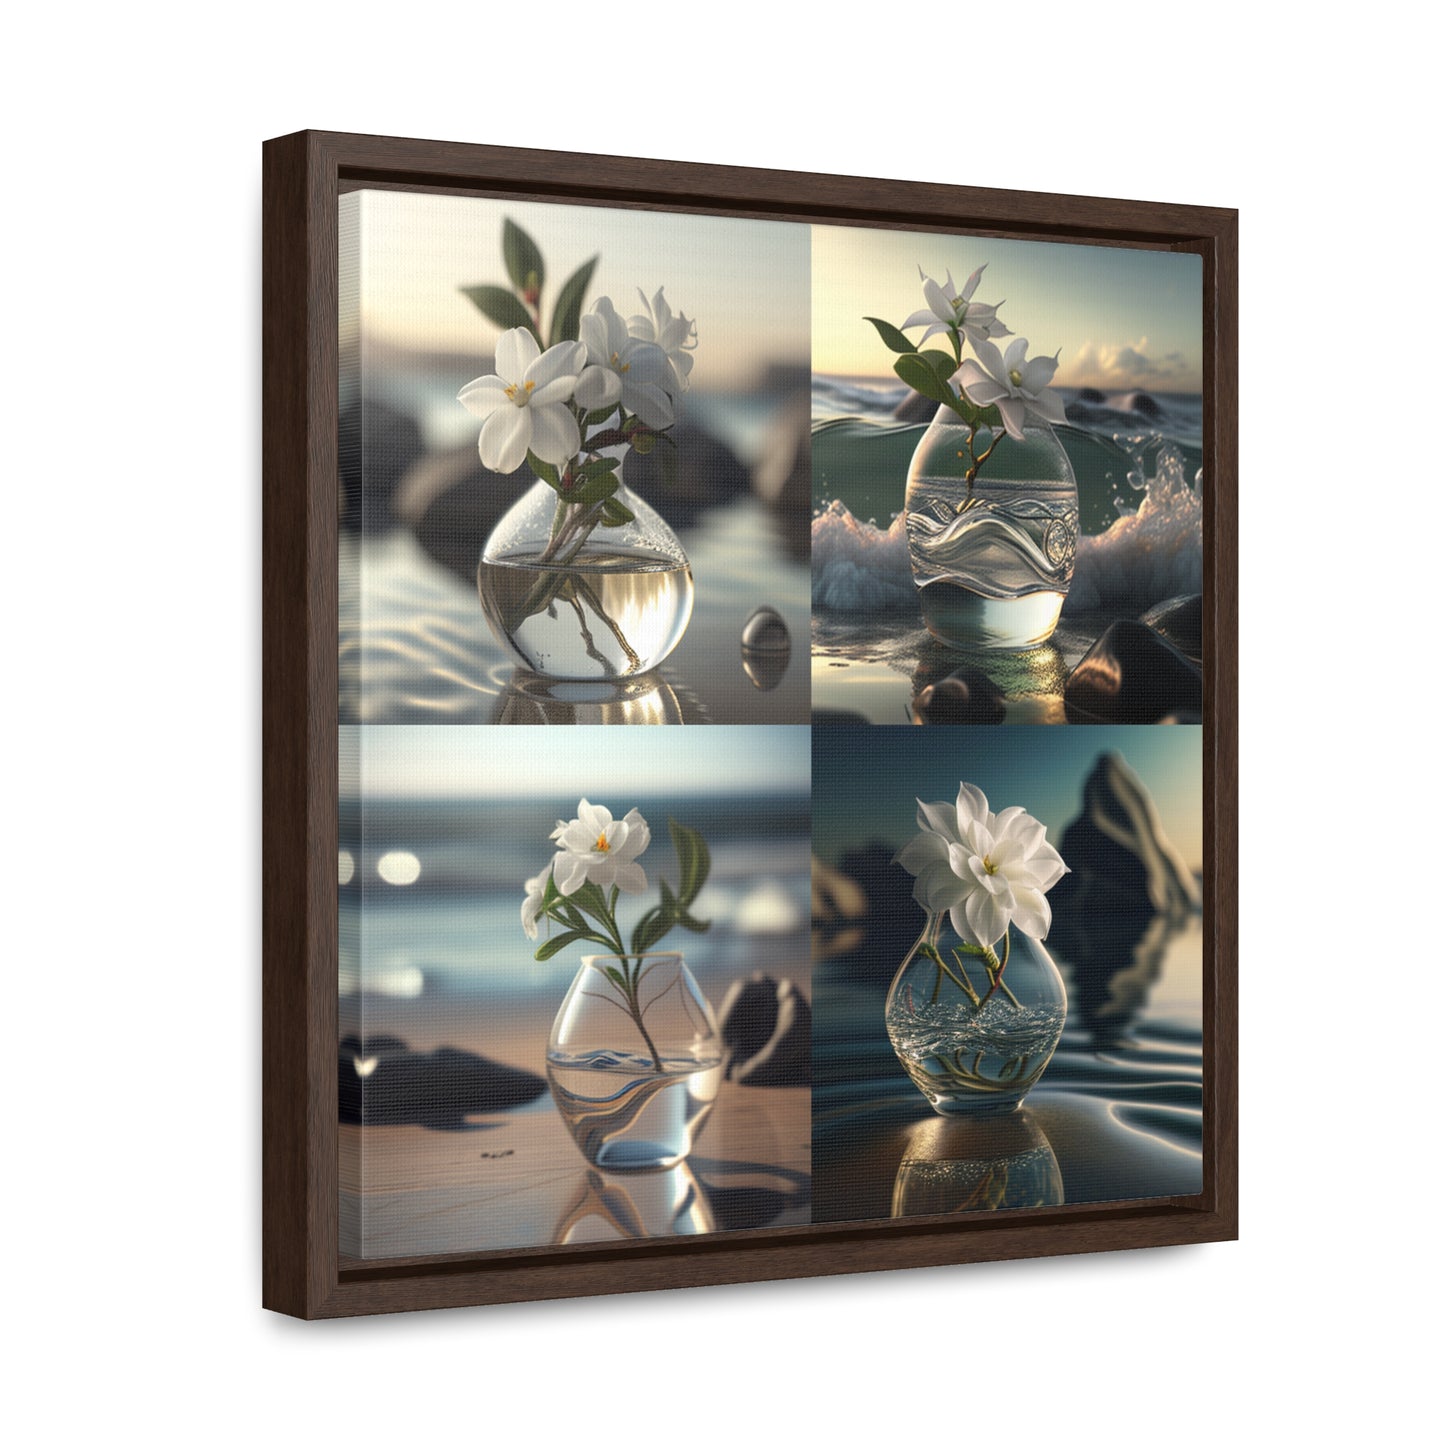 Gallery Canvas Wraps, Square Frame Jasmine glass vase 5